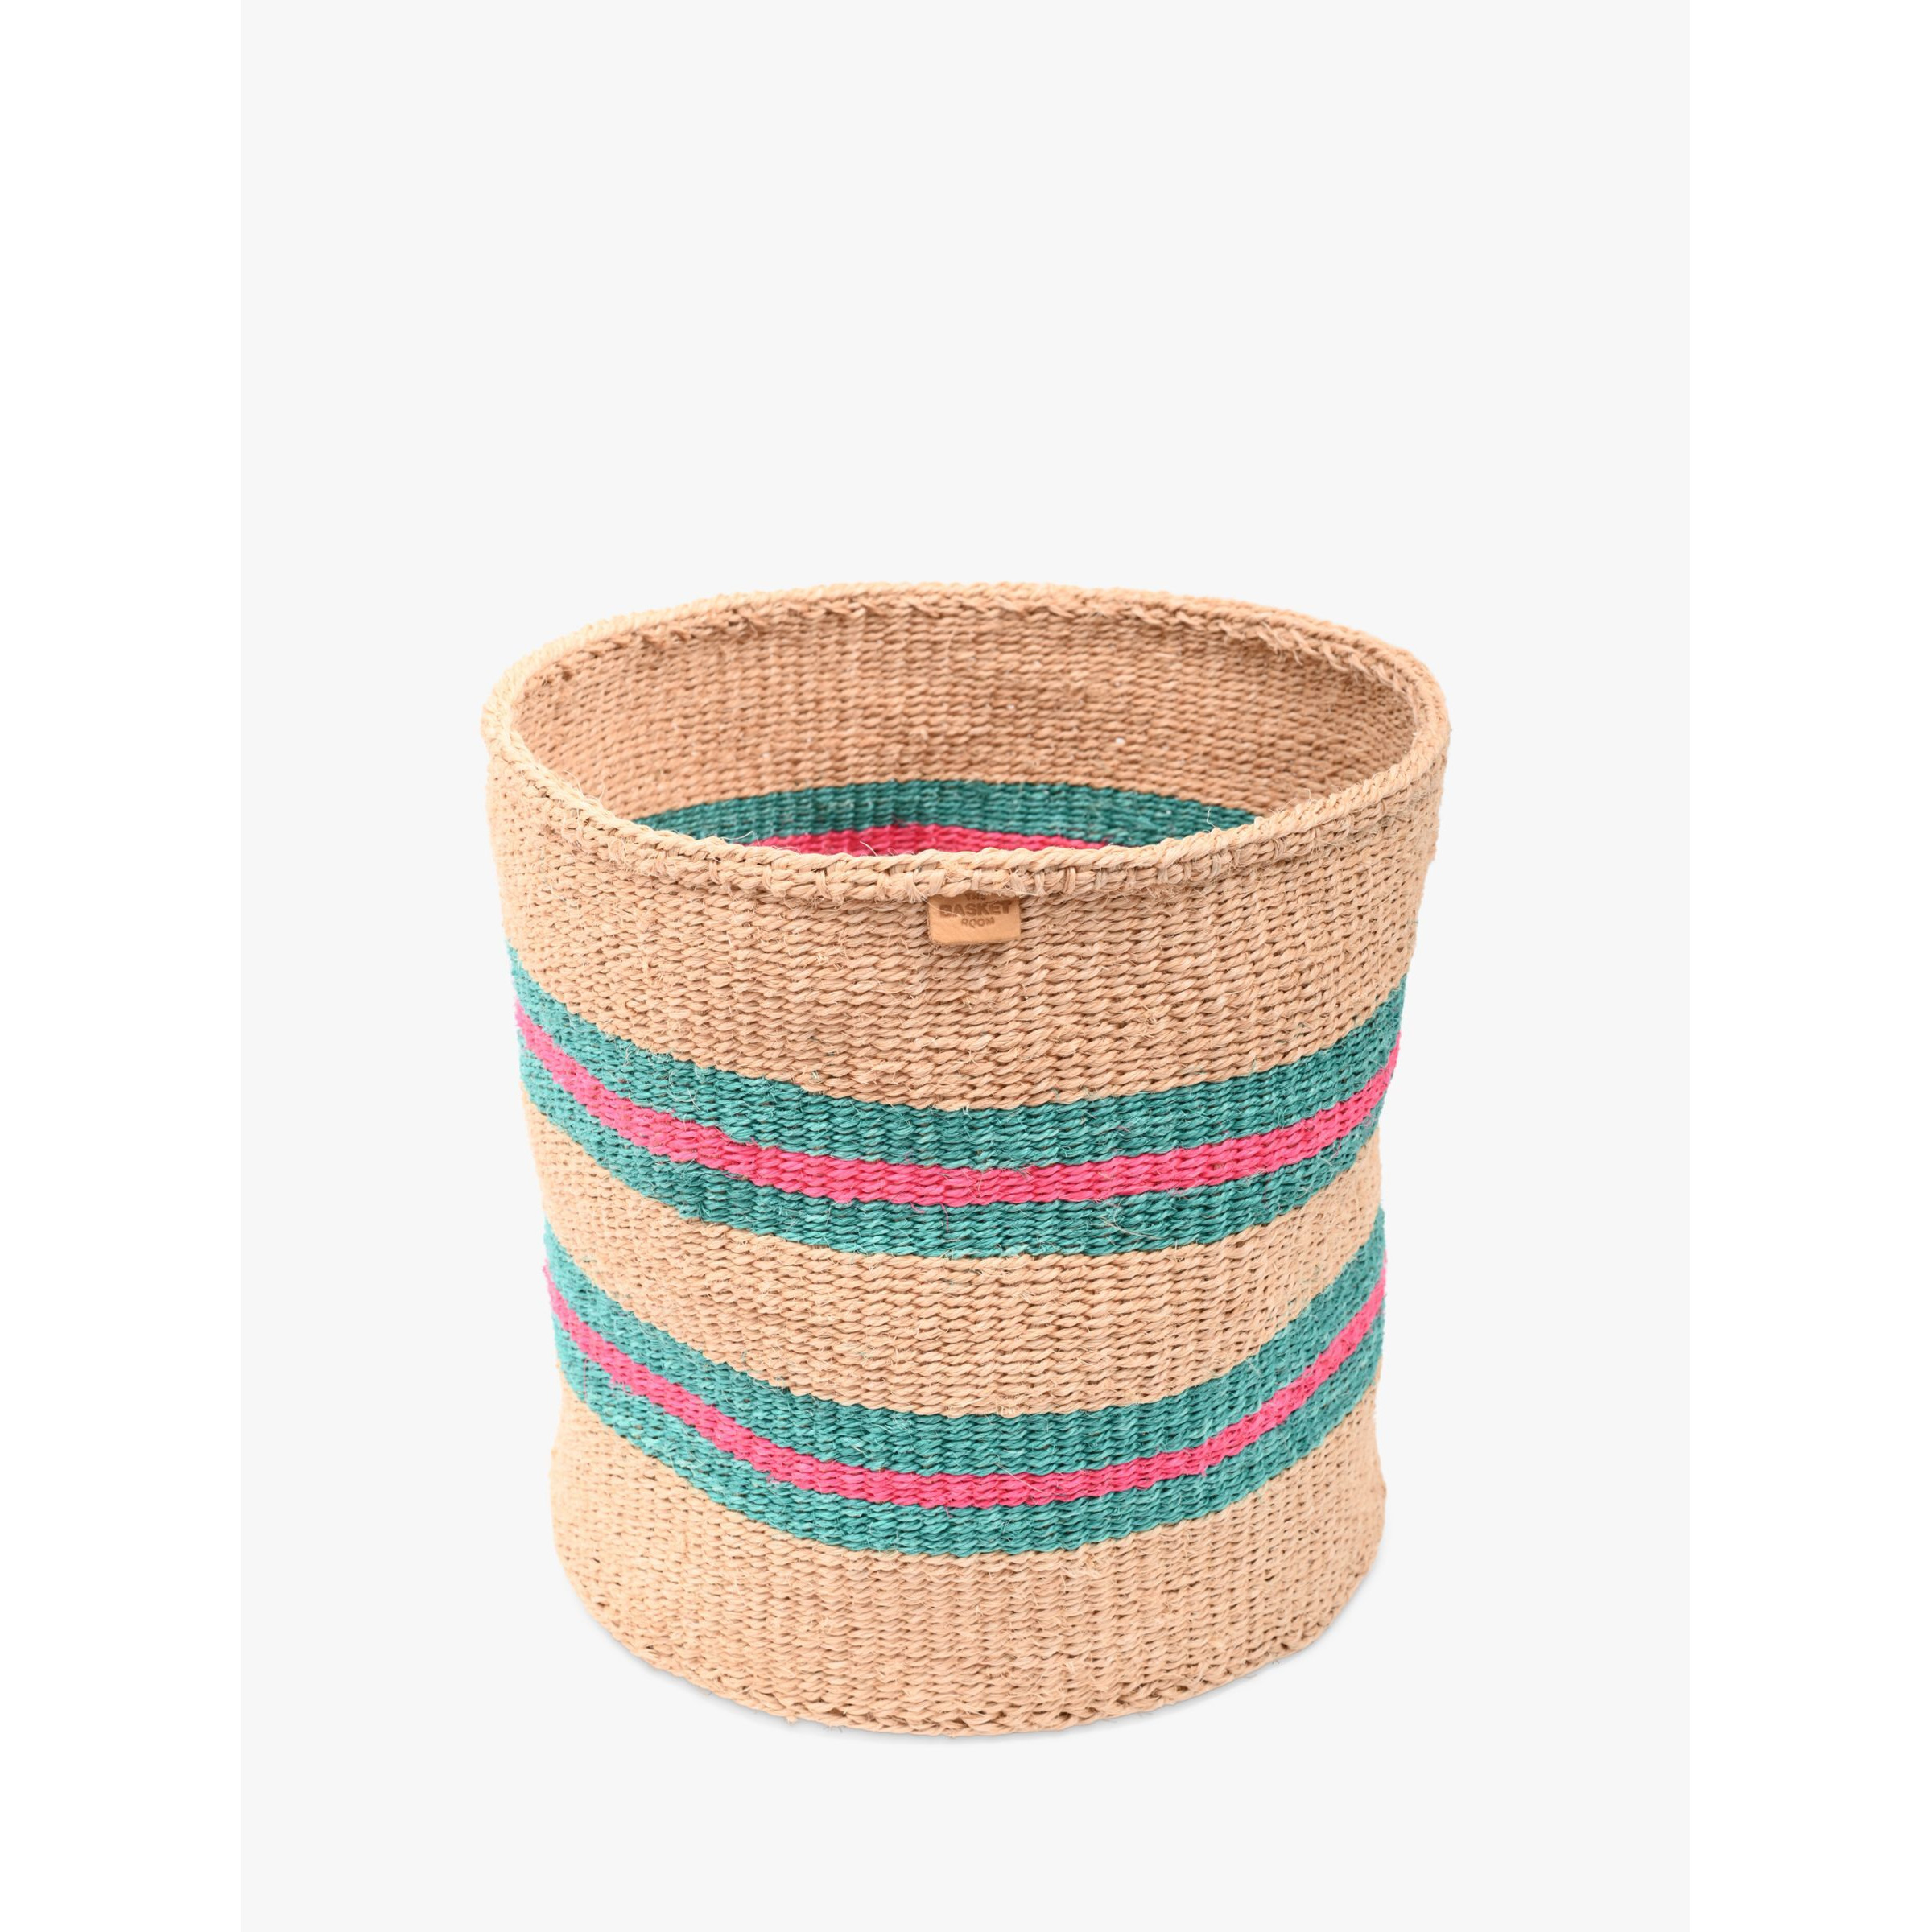 The Basket Room Ndoto Woven Storage Basket, Turquoise/Pink Stripe, Extra Large - image 1